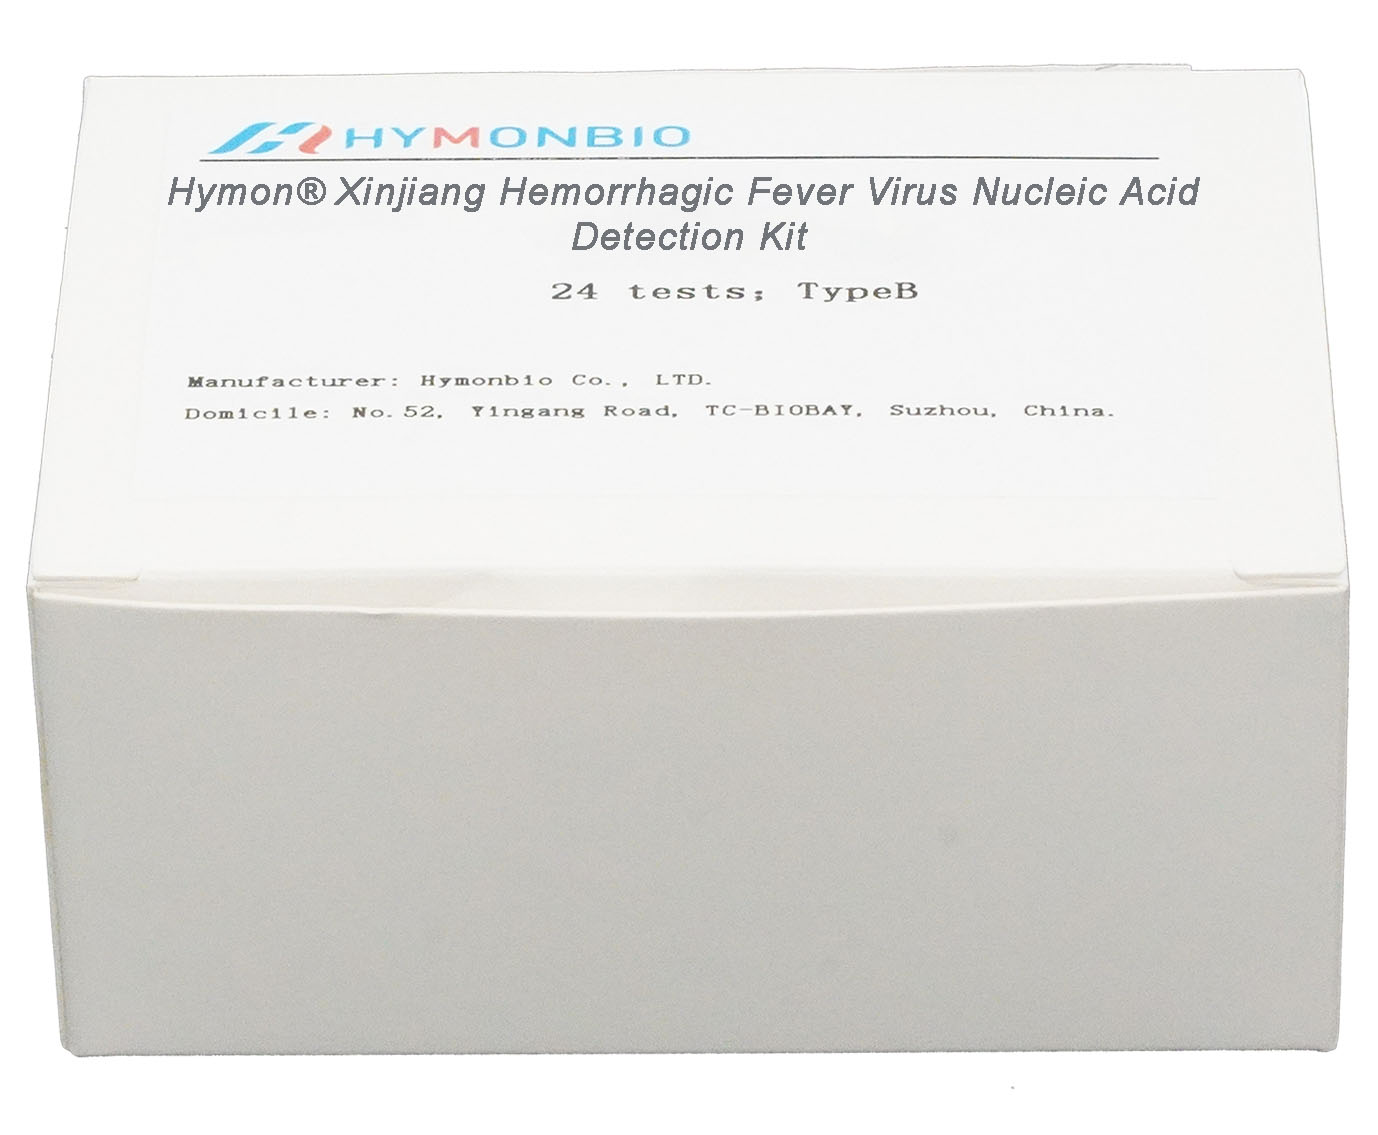 Hymon® Xinjiang Hemorrhagic Fever Virus Detection Kit Featured Image